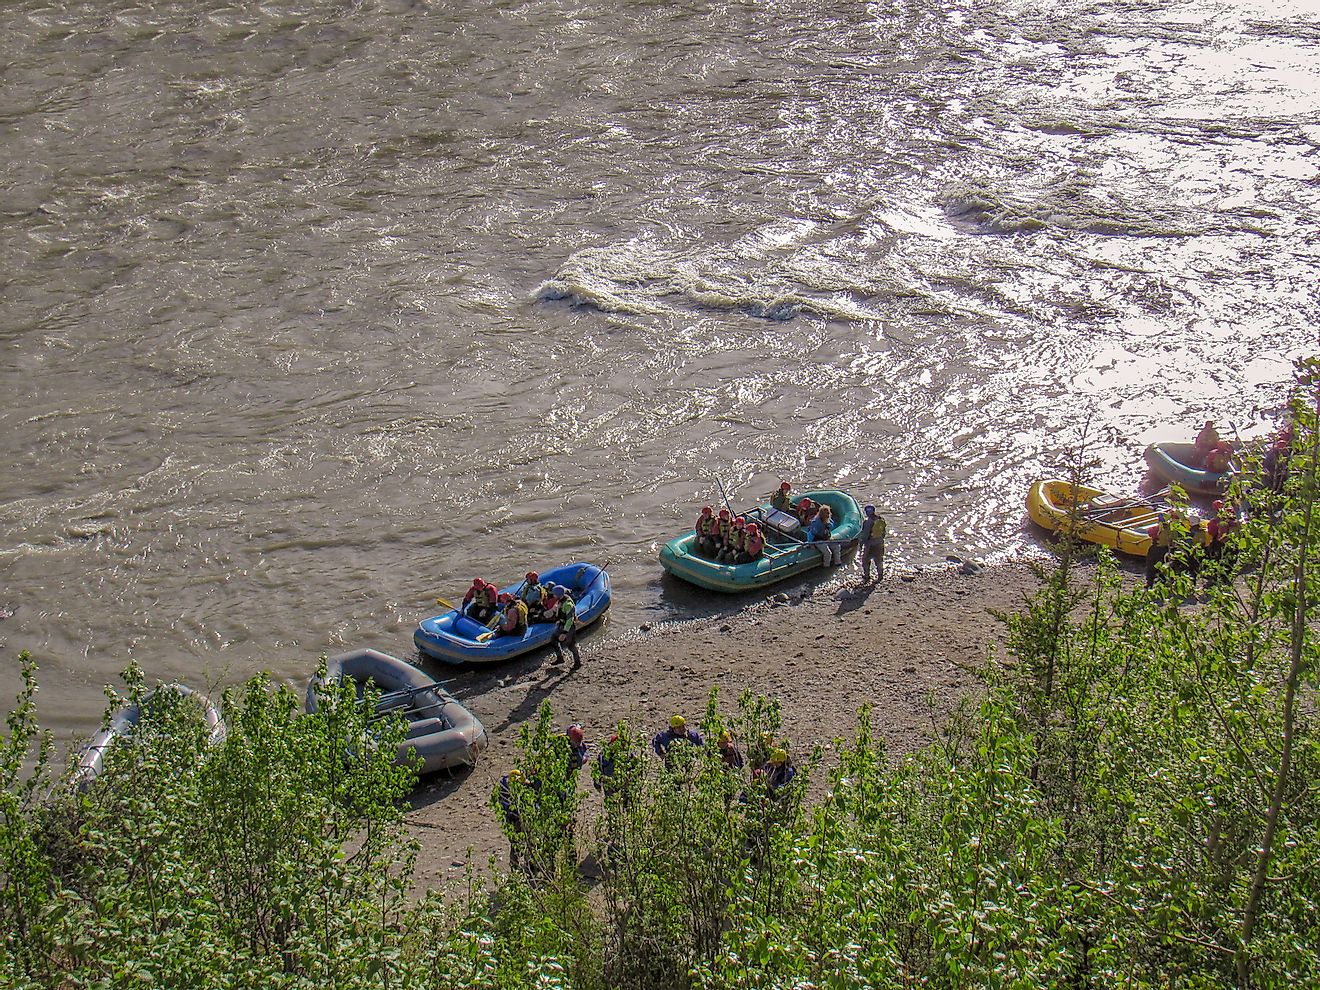  Tourists rafting on the Nenana river, near Denali Park, Alaska. Image credit: Rosamar/Shutterstock.com